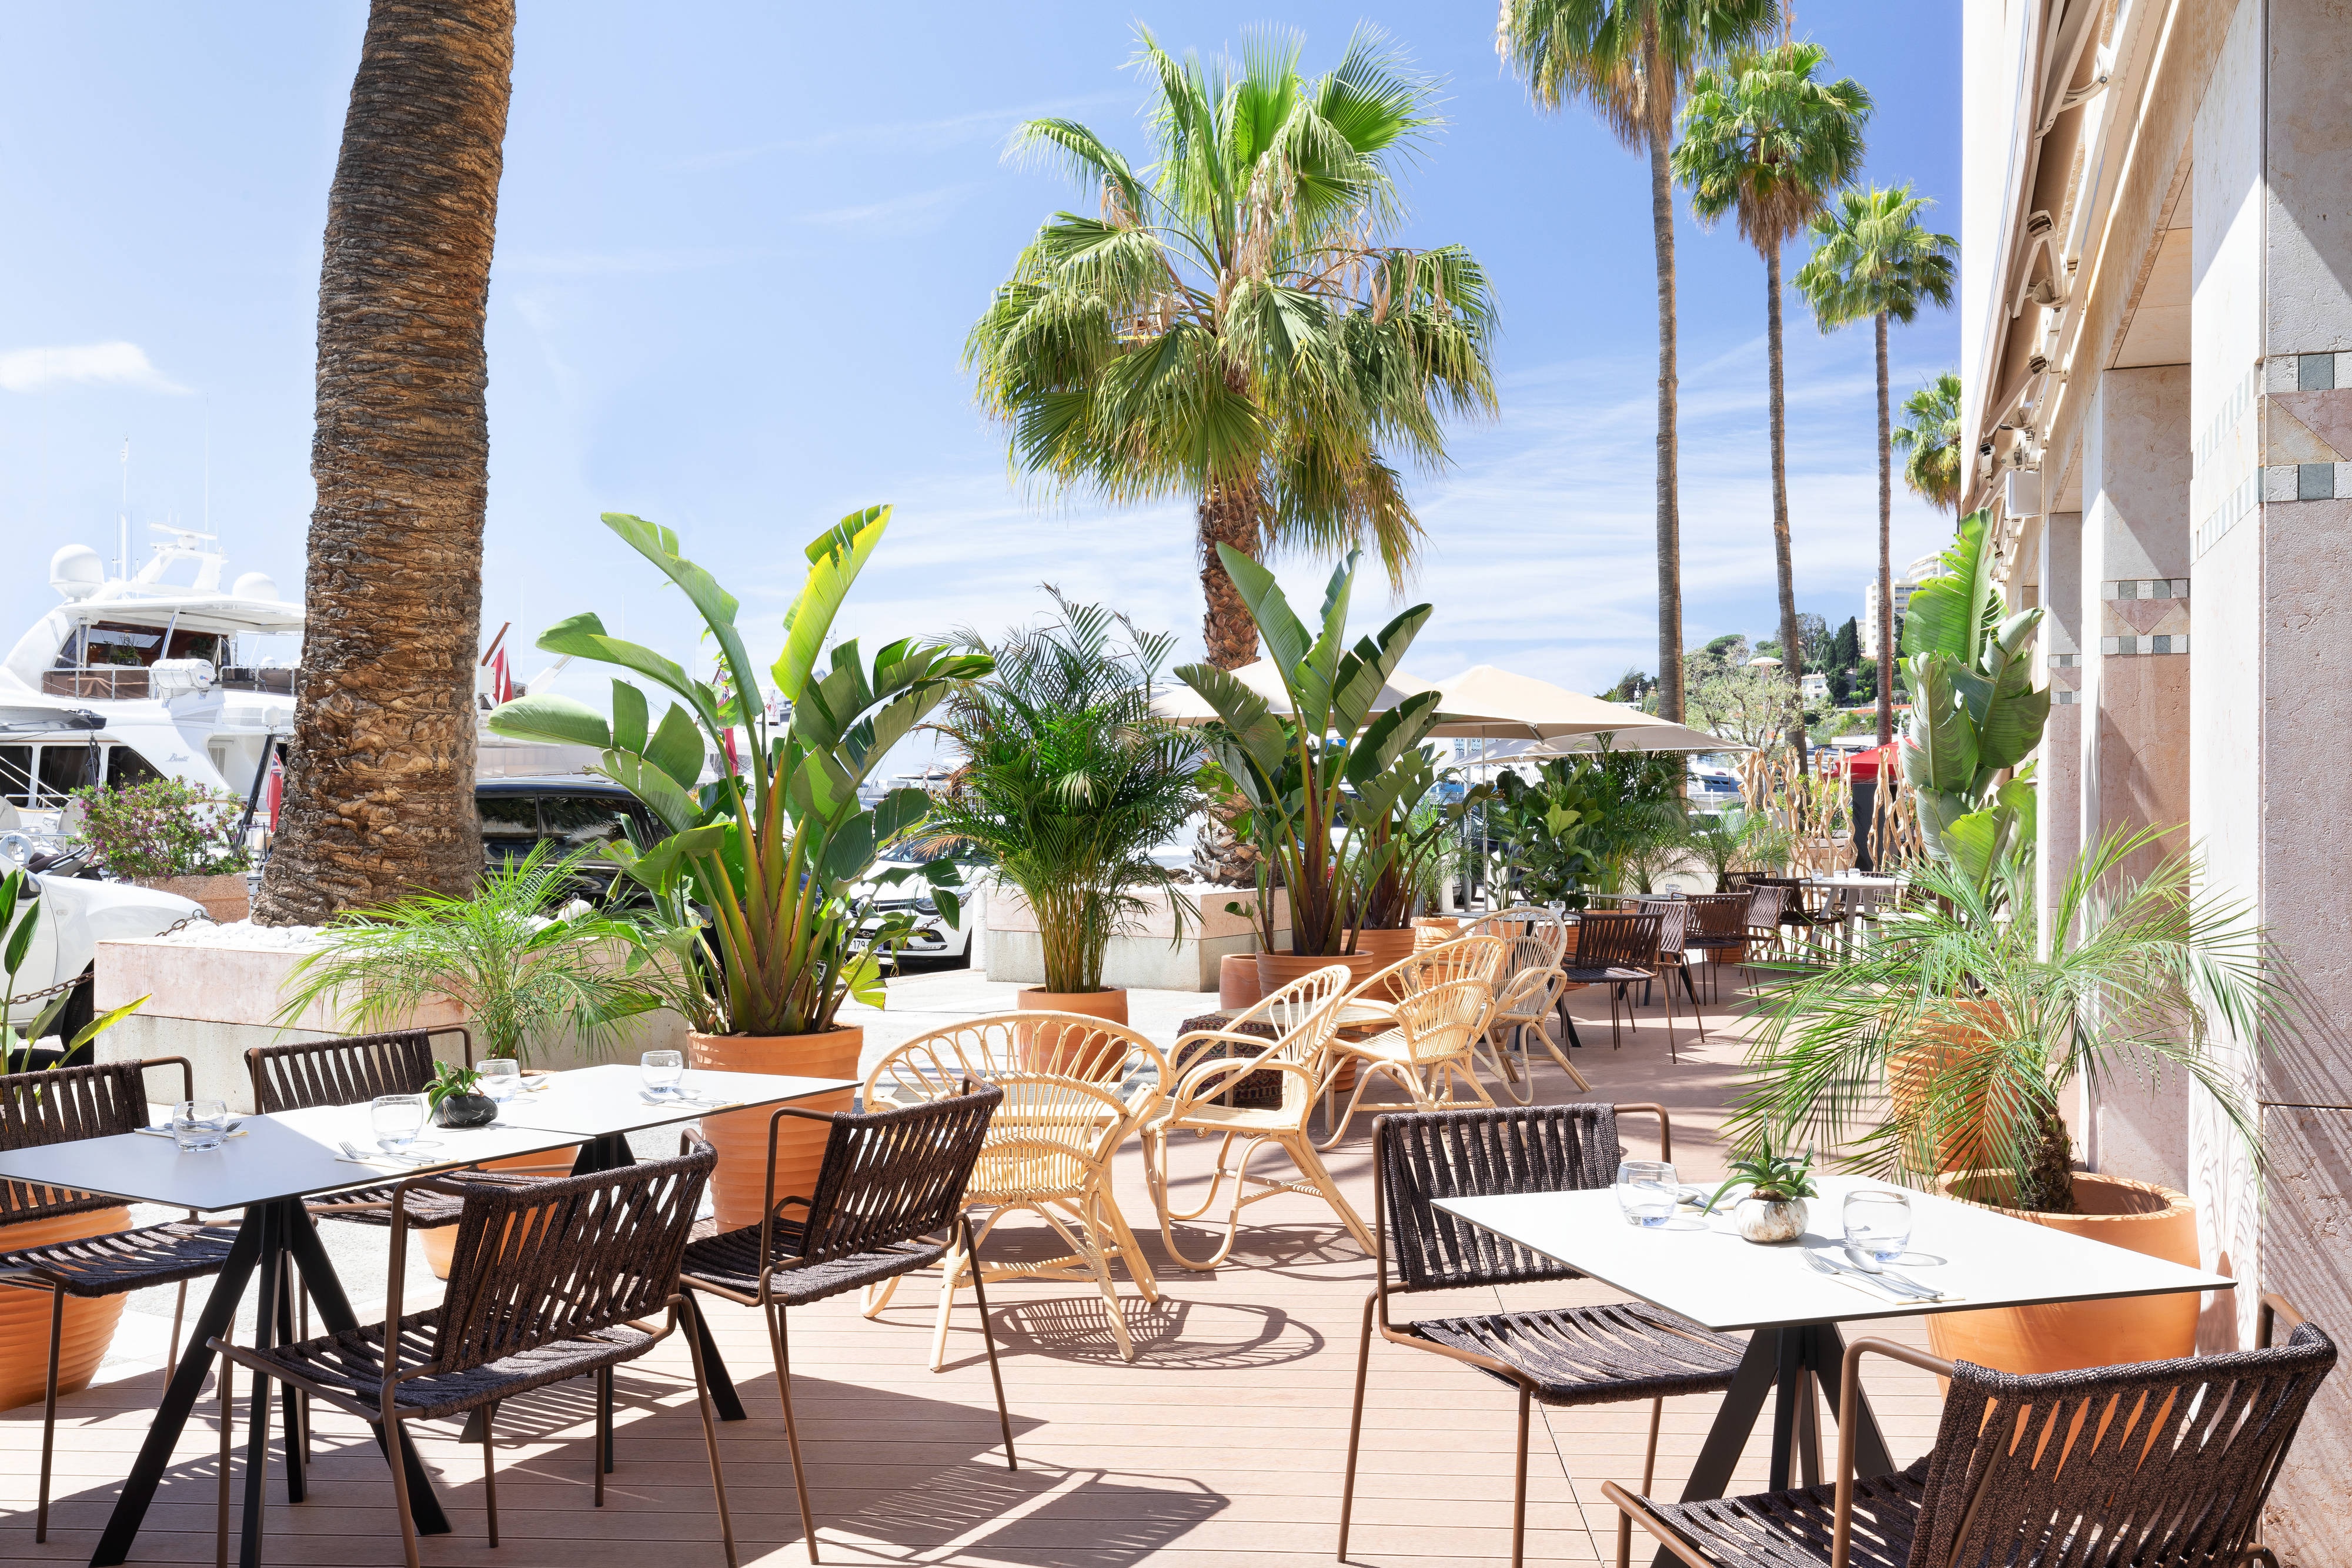 Bolinas Restaurant & Outdoor Terrace